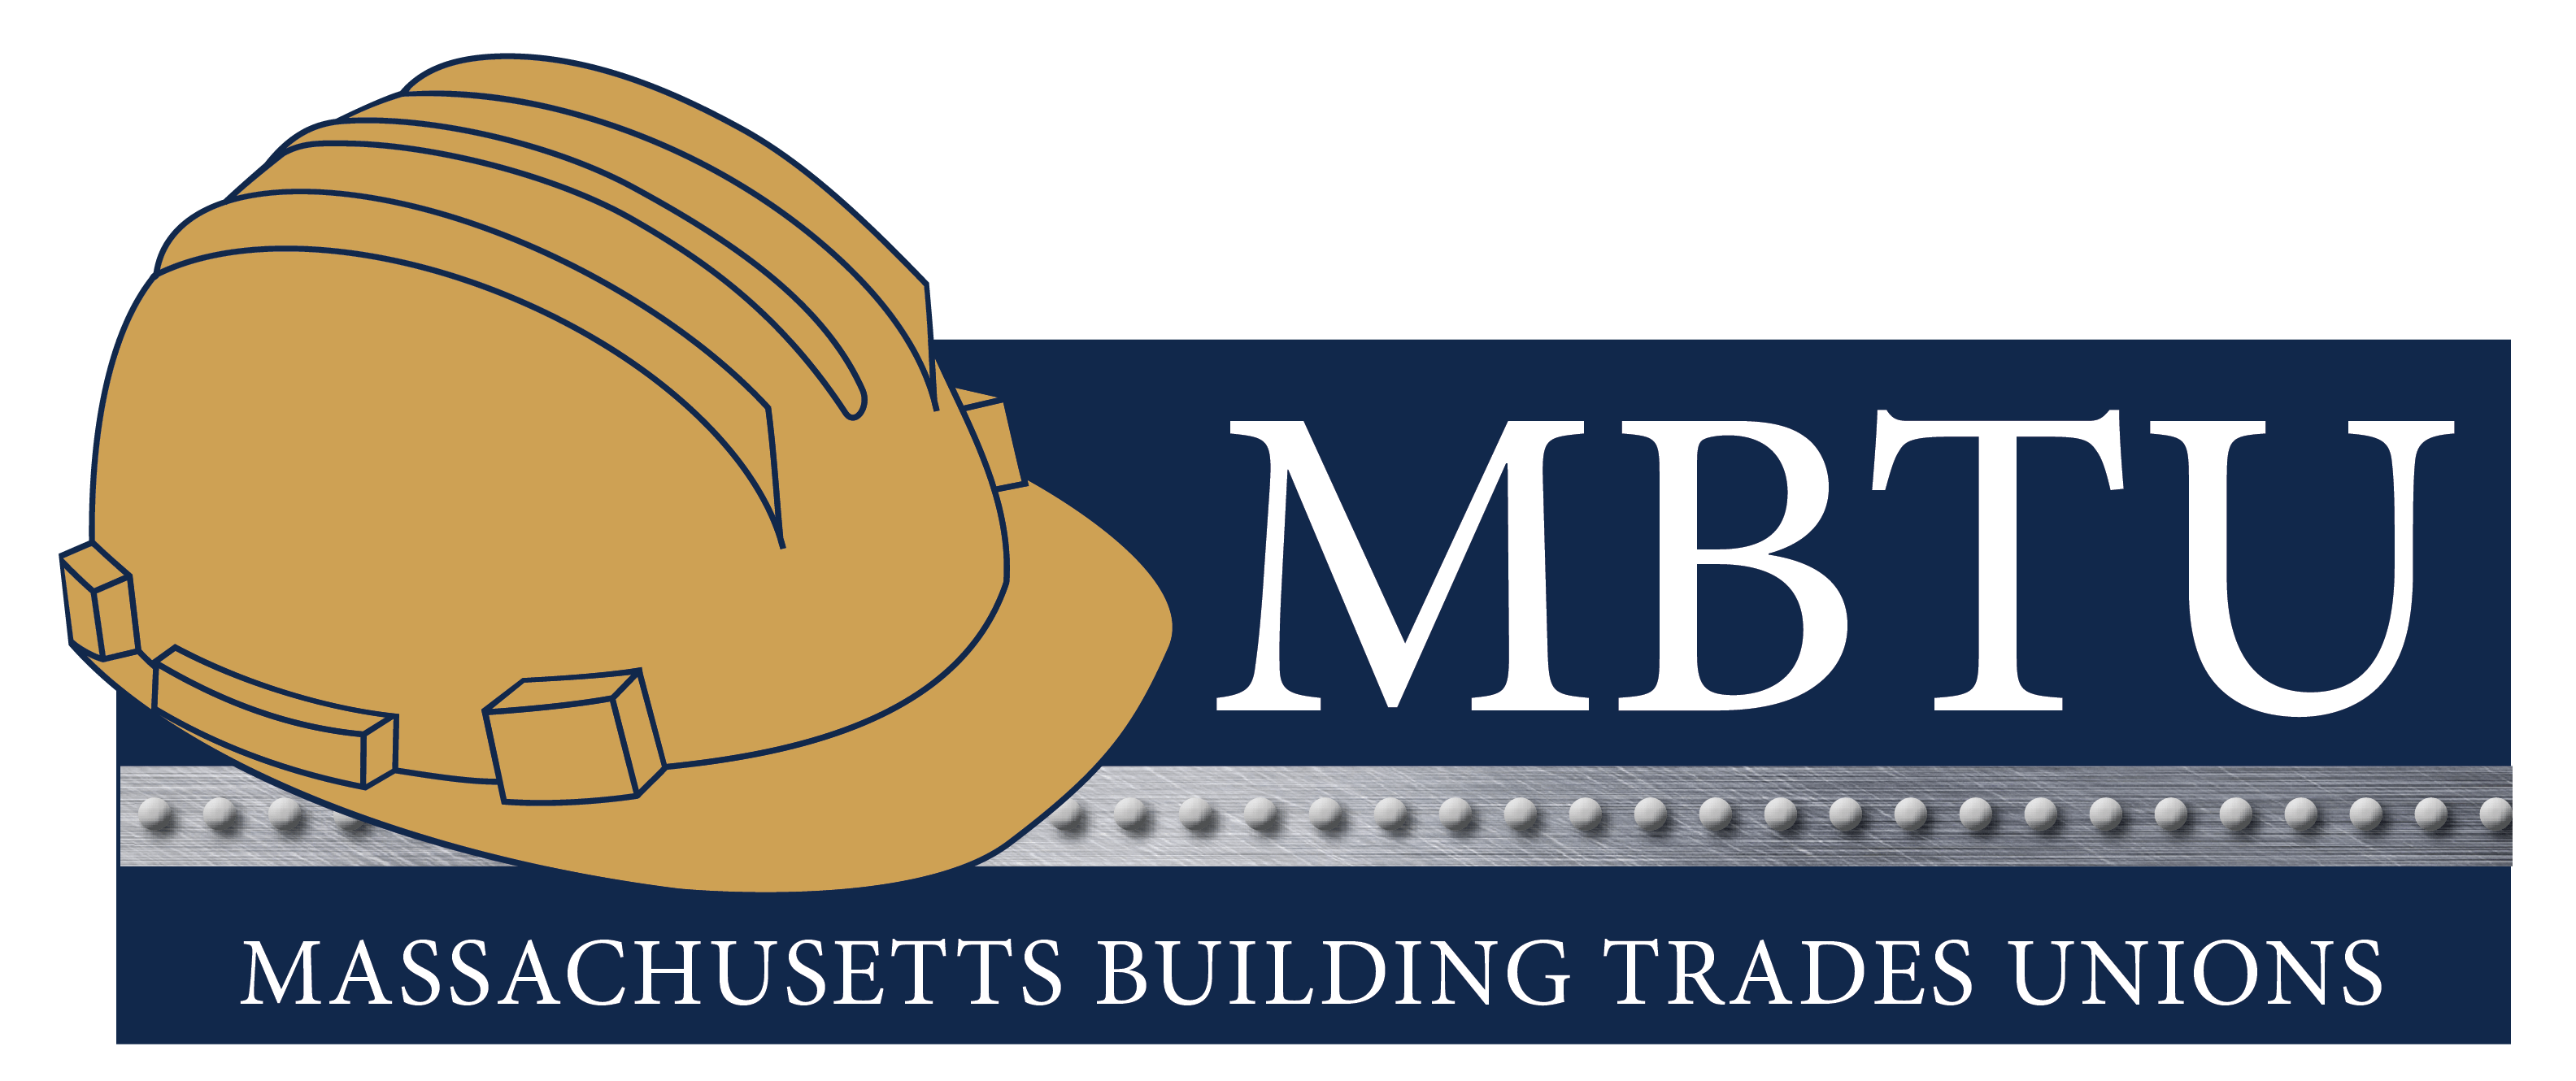 Massachusetts Building Trades union